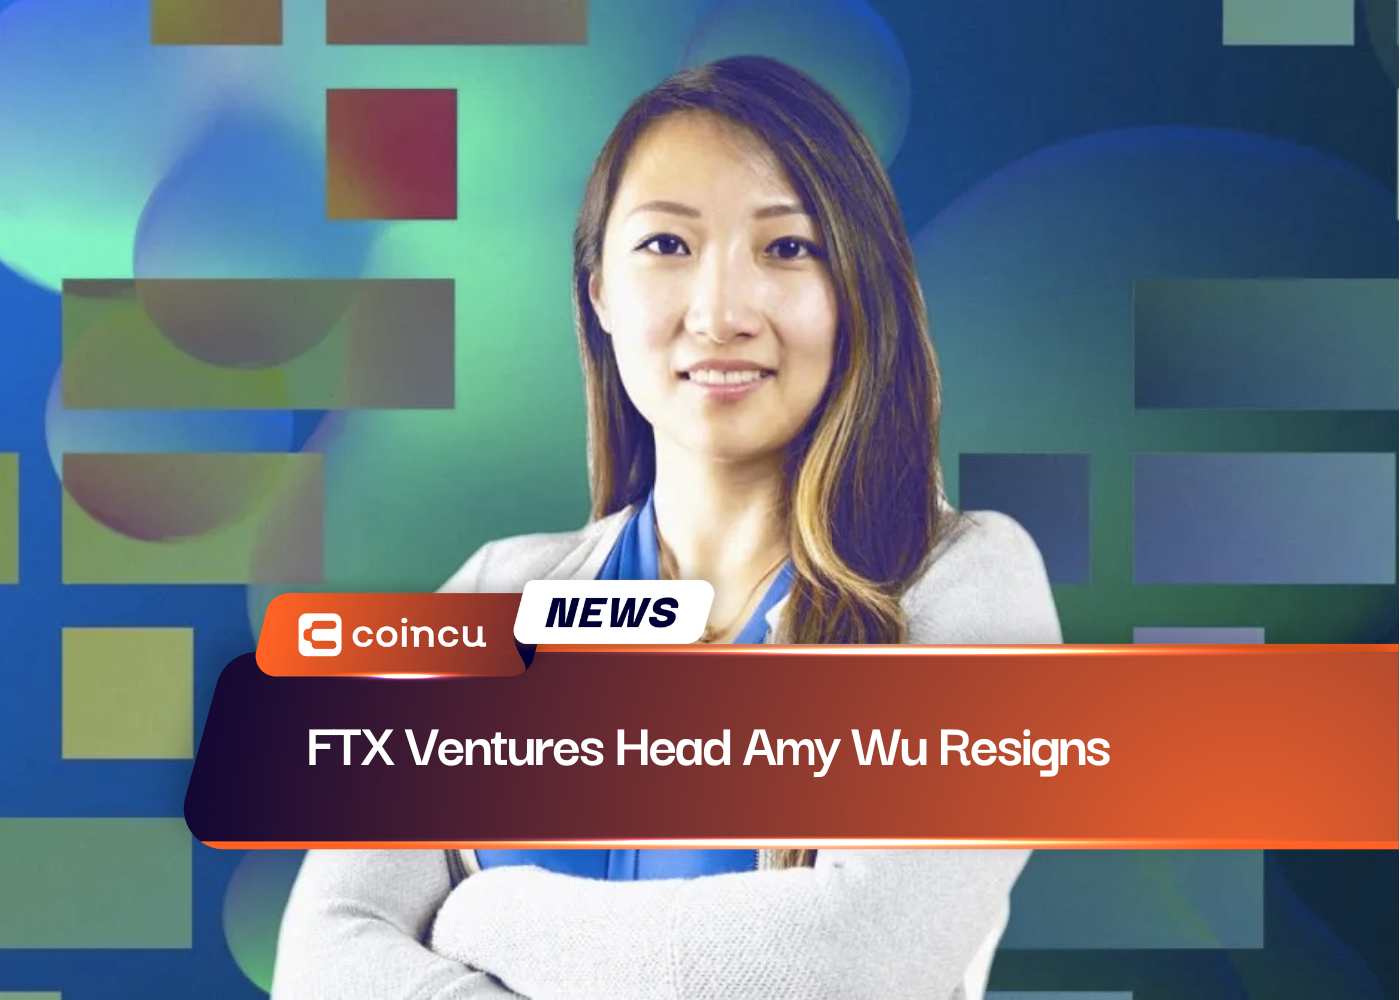 FTX Ventures Head Amy Wu Resigns